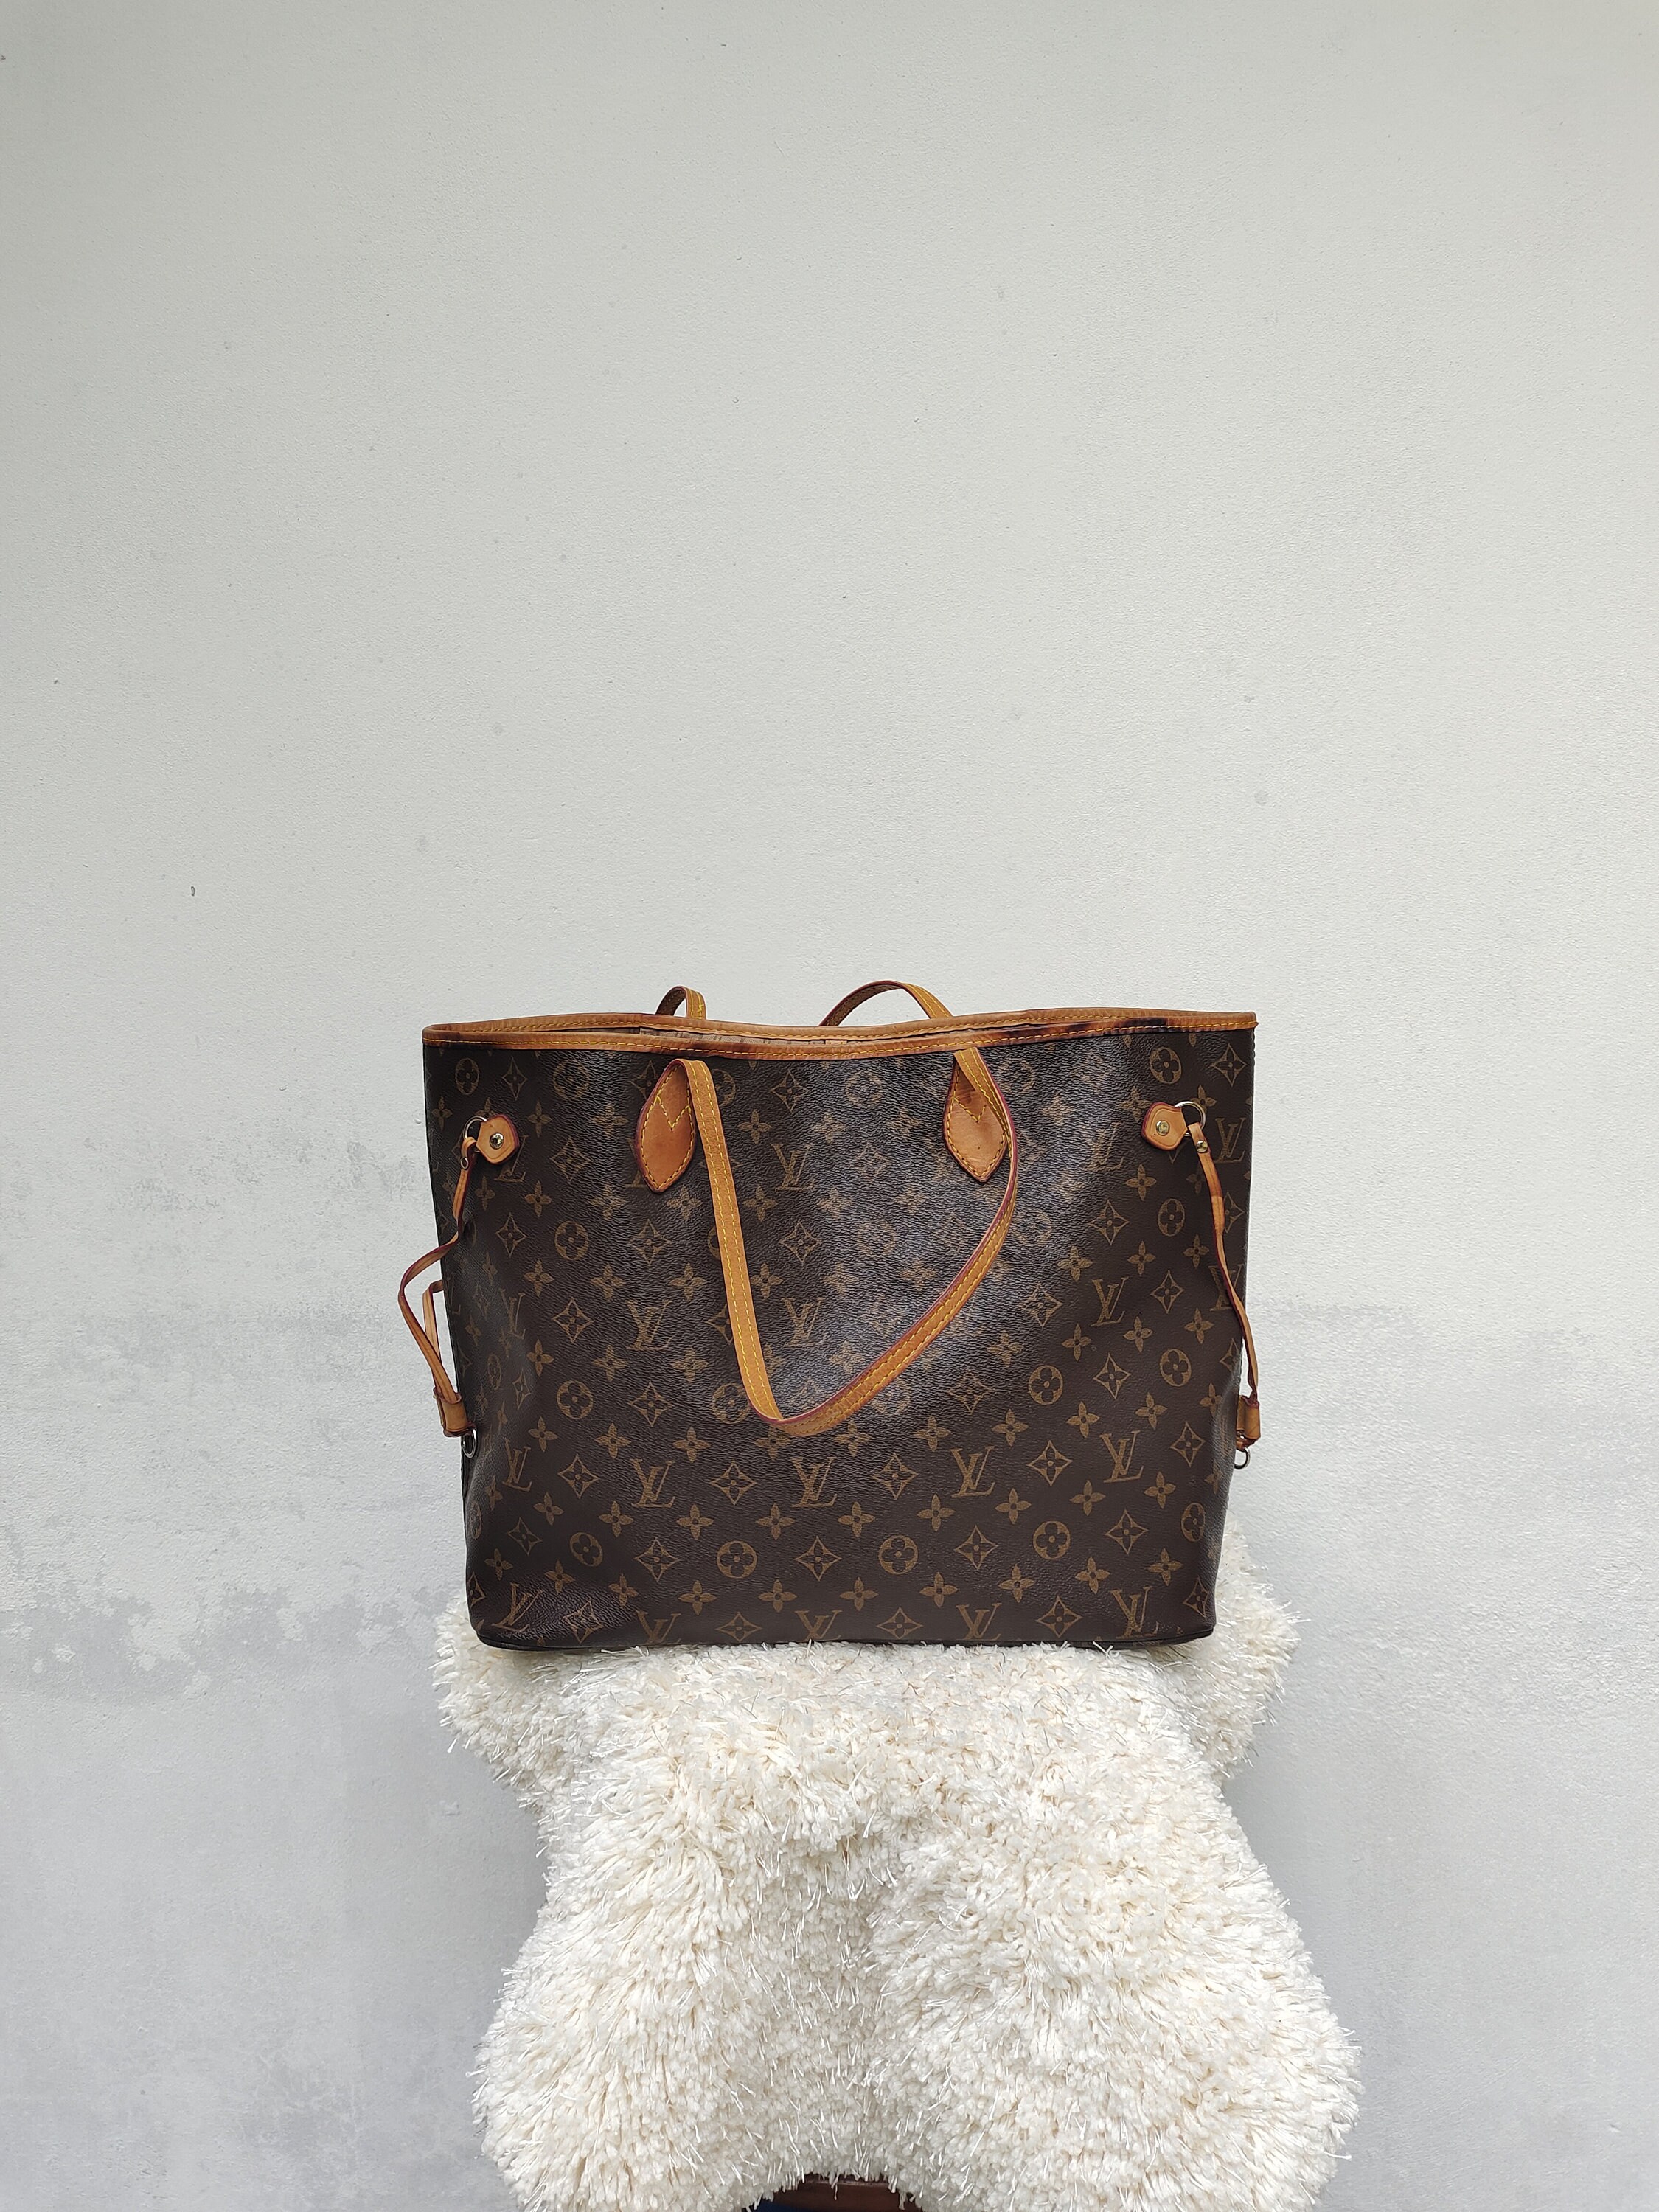 Buy Authentic Louis Vuitton Handbag Neverfull Online In India -  India